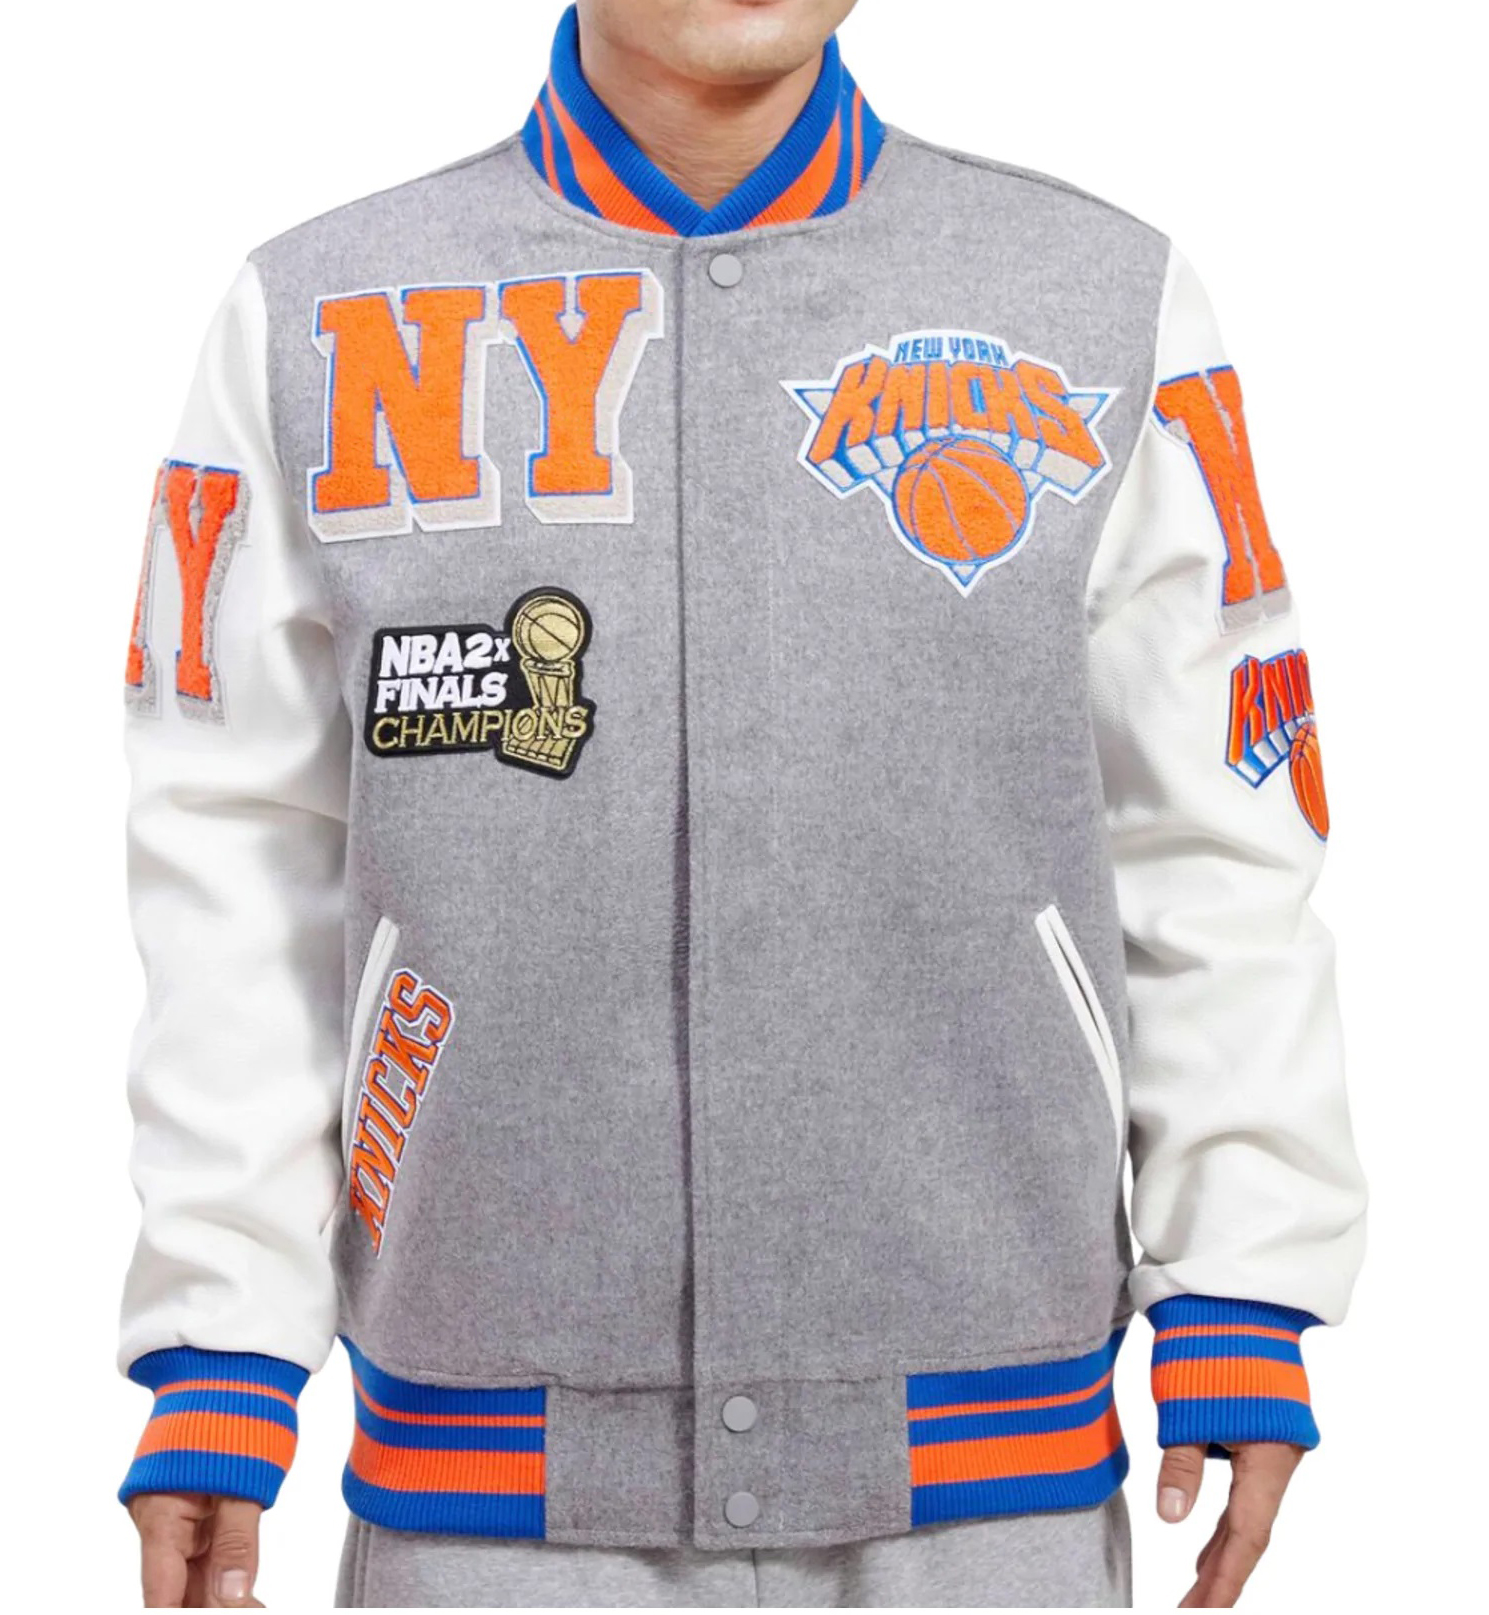 Maker of Jacket Fashion Jackets New York Knicks NBA Grey White Varsity